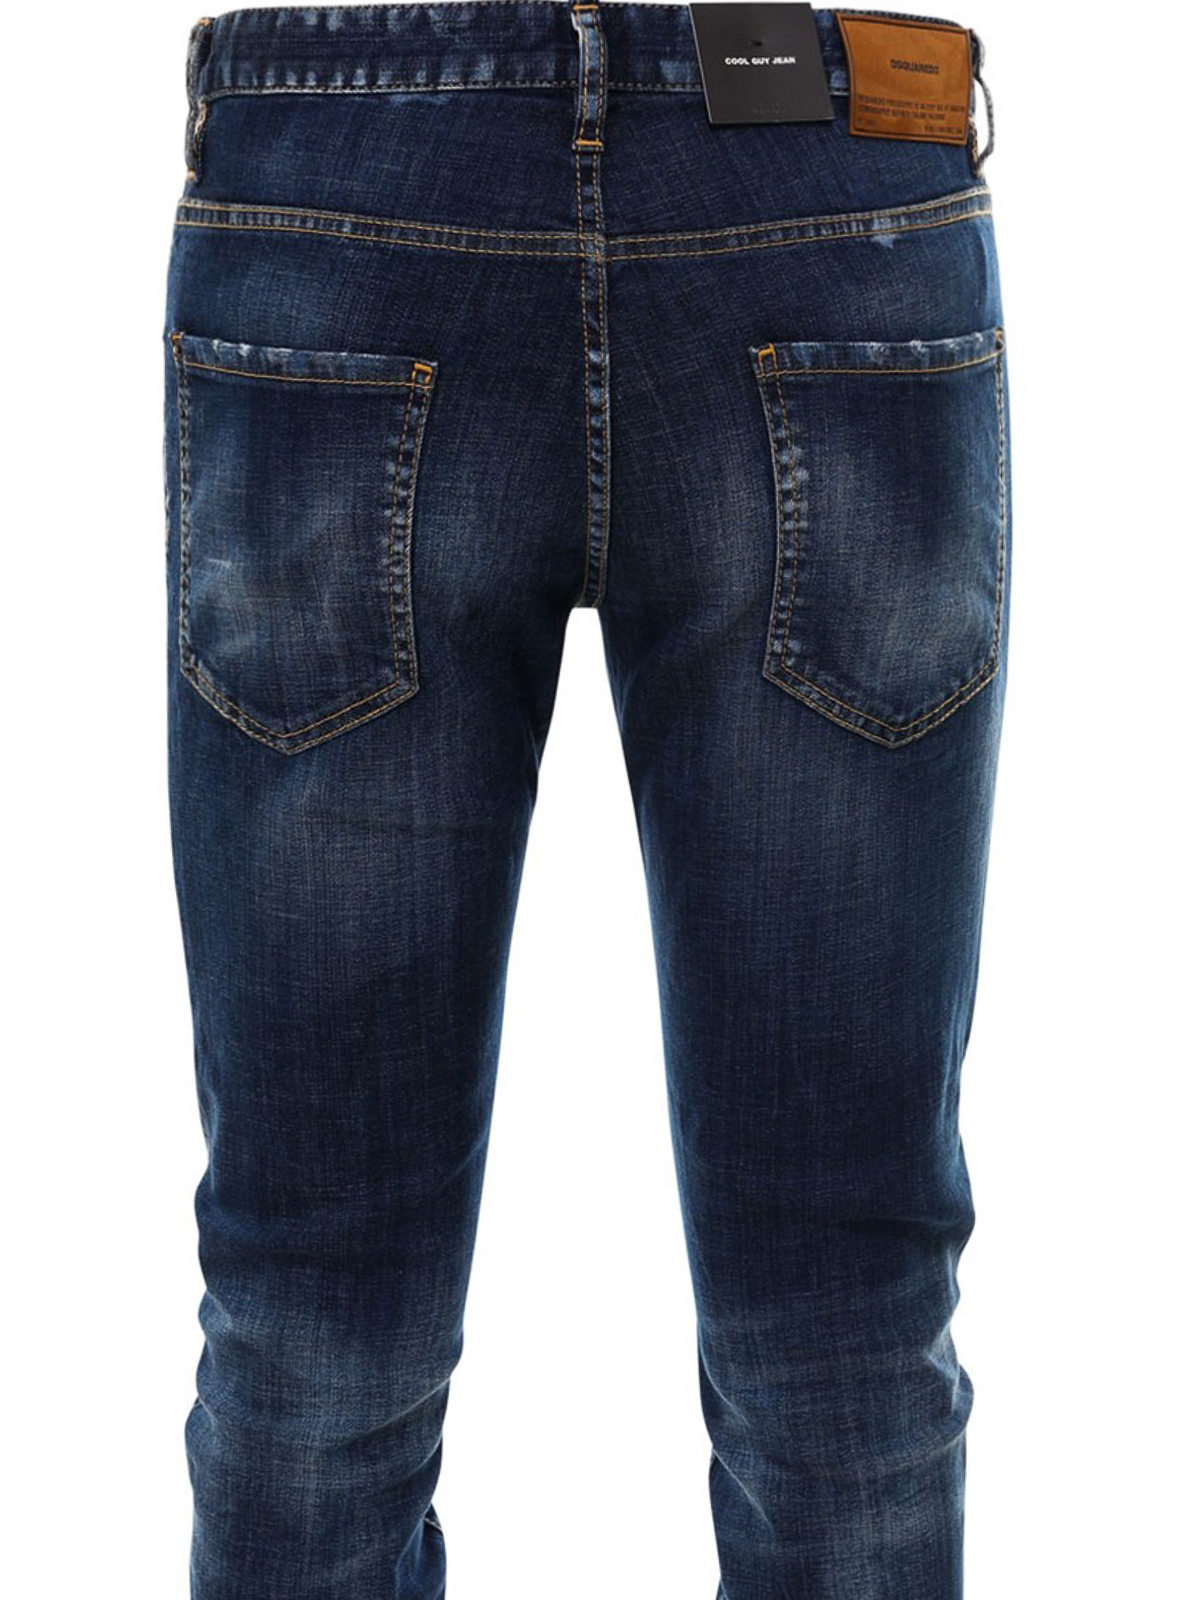 dsquared2 jeans outlet online